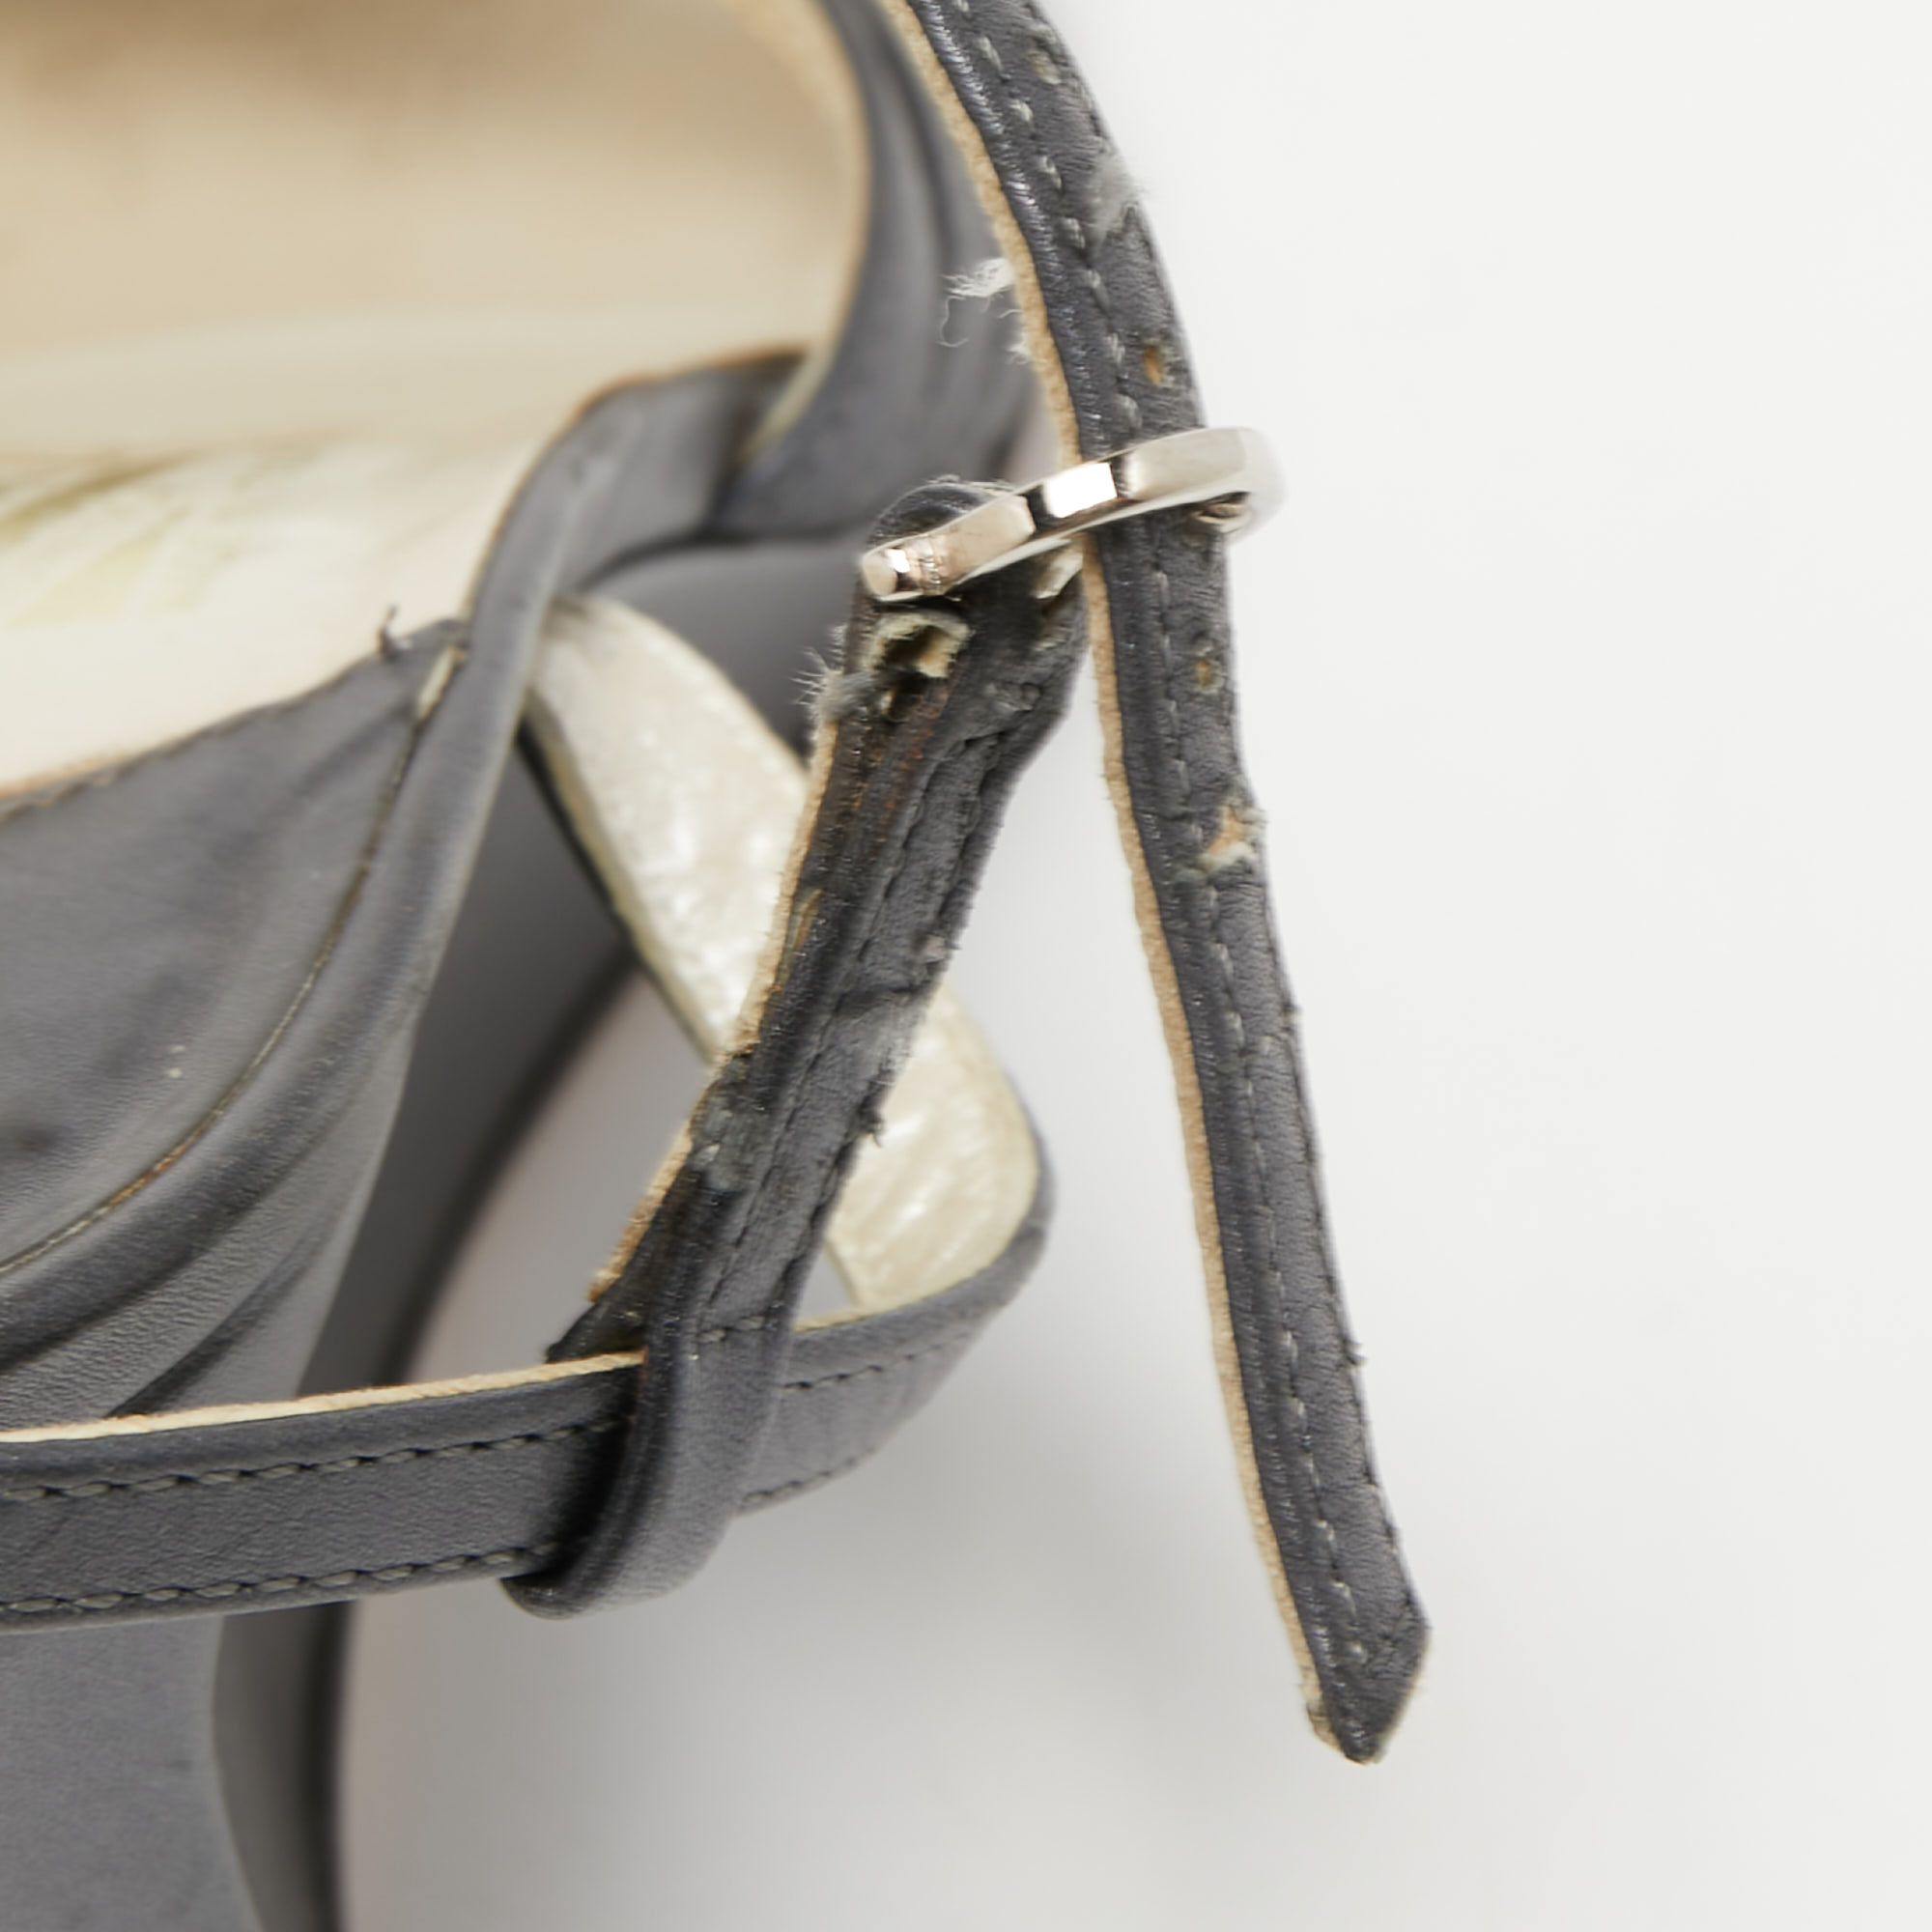 Salvatore Ferragamo Grey Leather Strappy Wedge Sandals Size 36.5